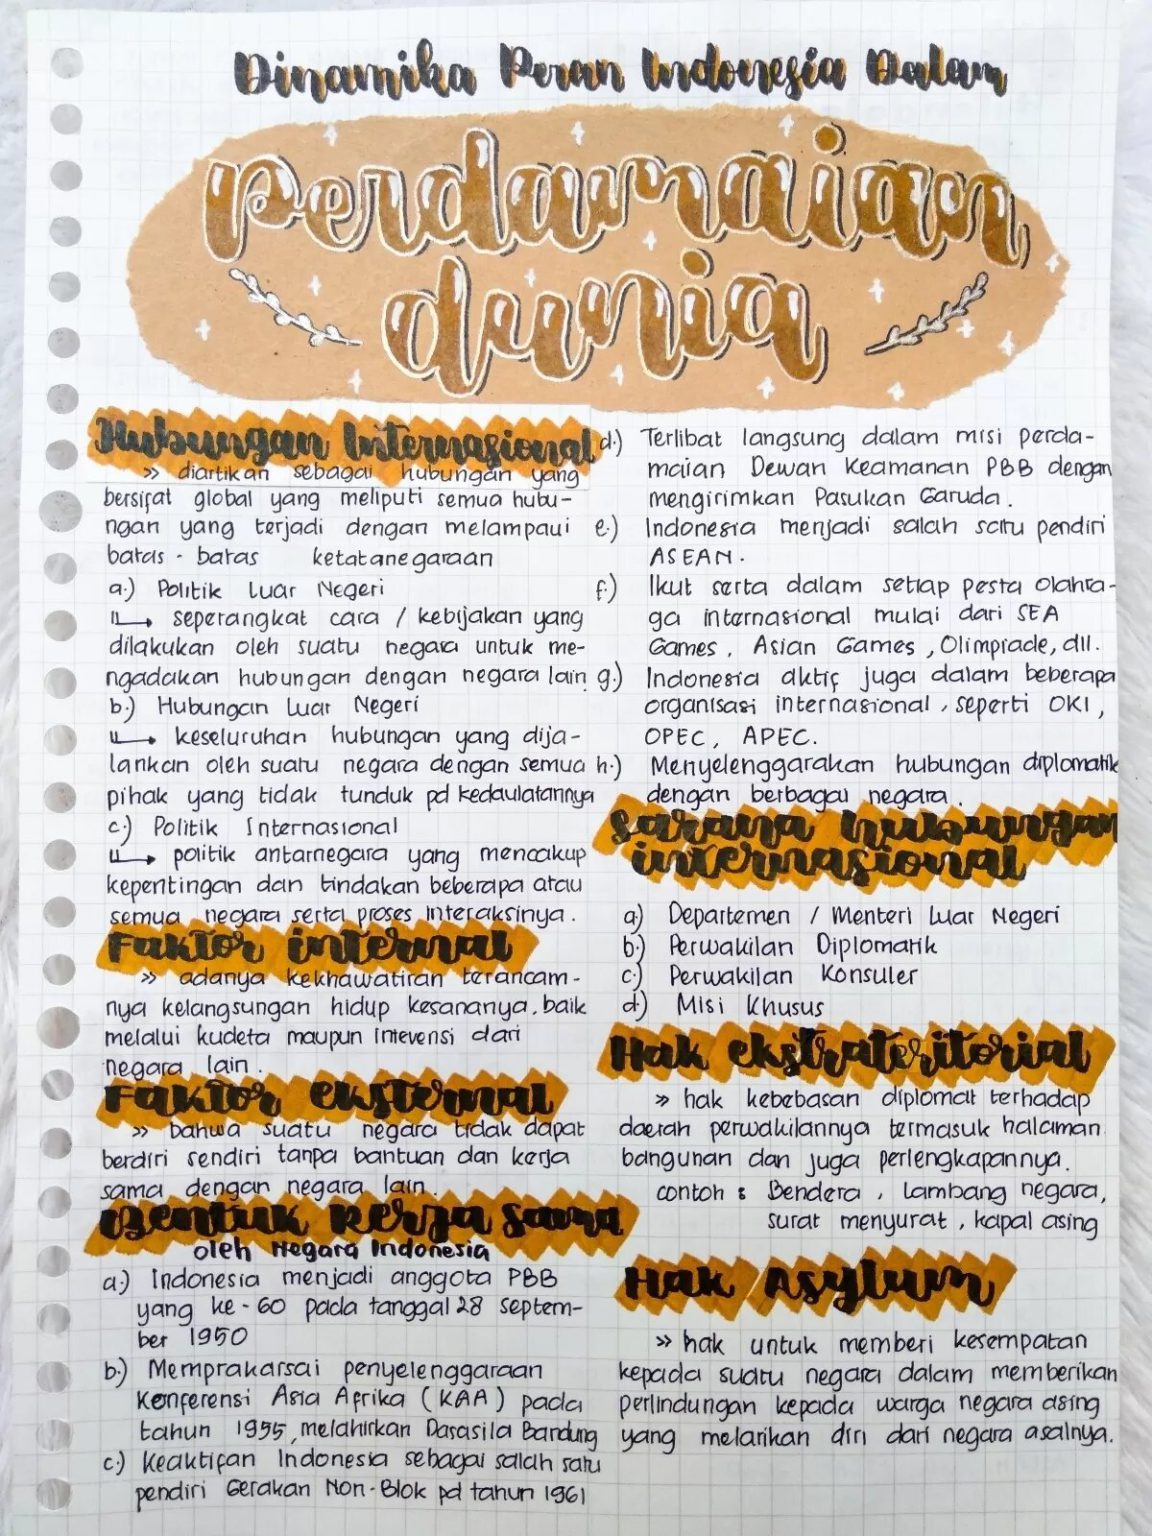 Inspiratif! Catatan Aesthetic Kelas 11 - Page 2 of 2 - Clear Indonesia News